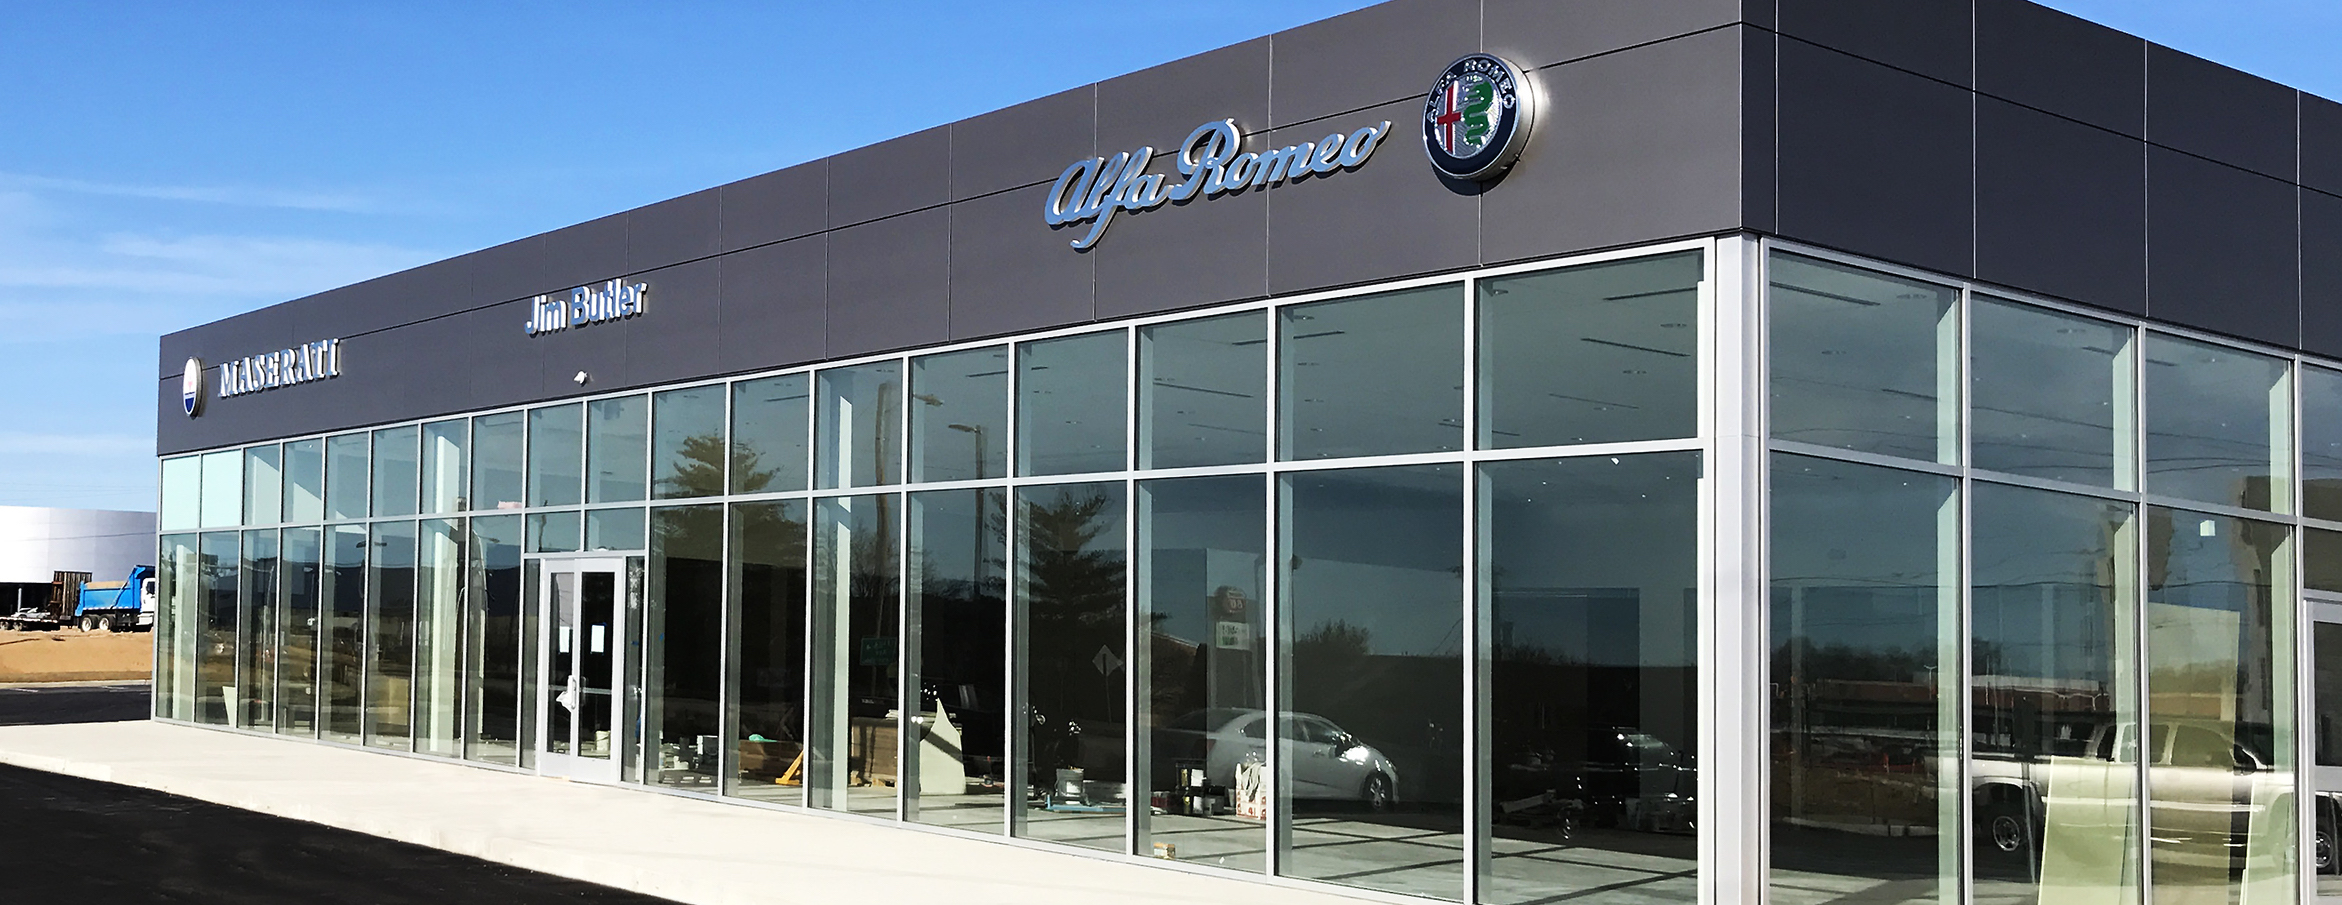 Alfa Romeo, Maserati dealership opens